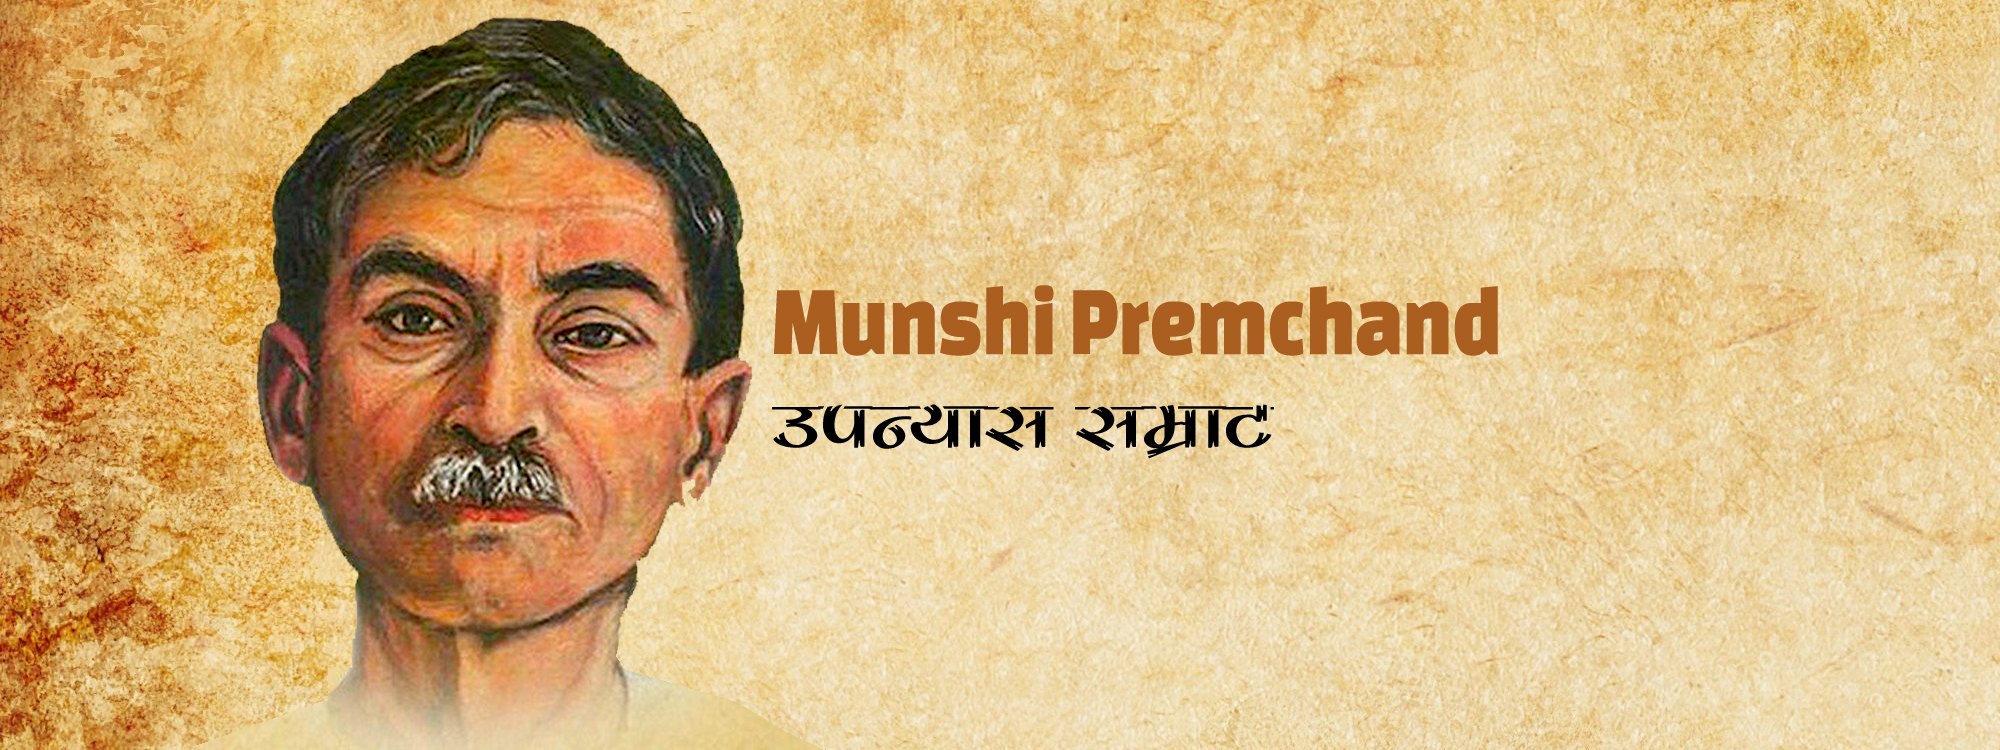 Munshi Premchand – Upanyaas Samraat – Maharishi Arvind Knwoledge ...